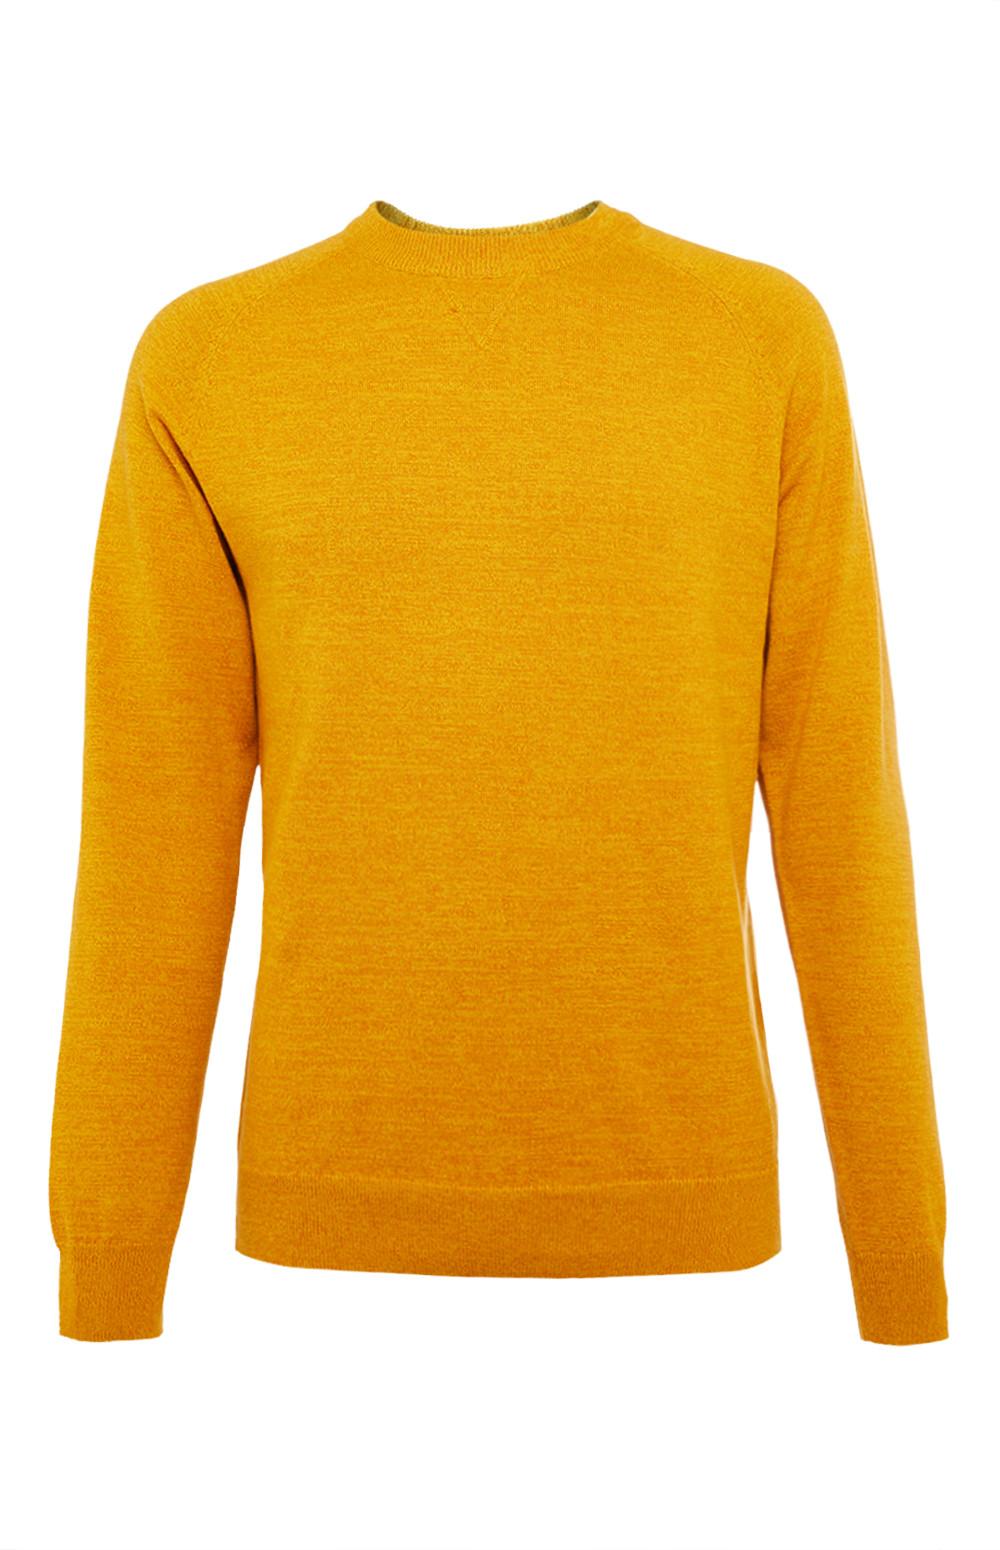 Mustard Cotton Raglan Crew Neck Sweater | Men's Jumpers & Sweaters ...